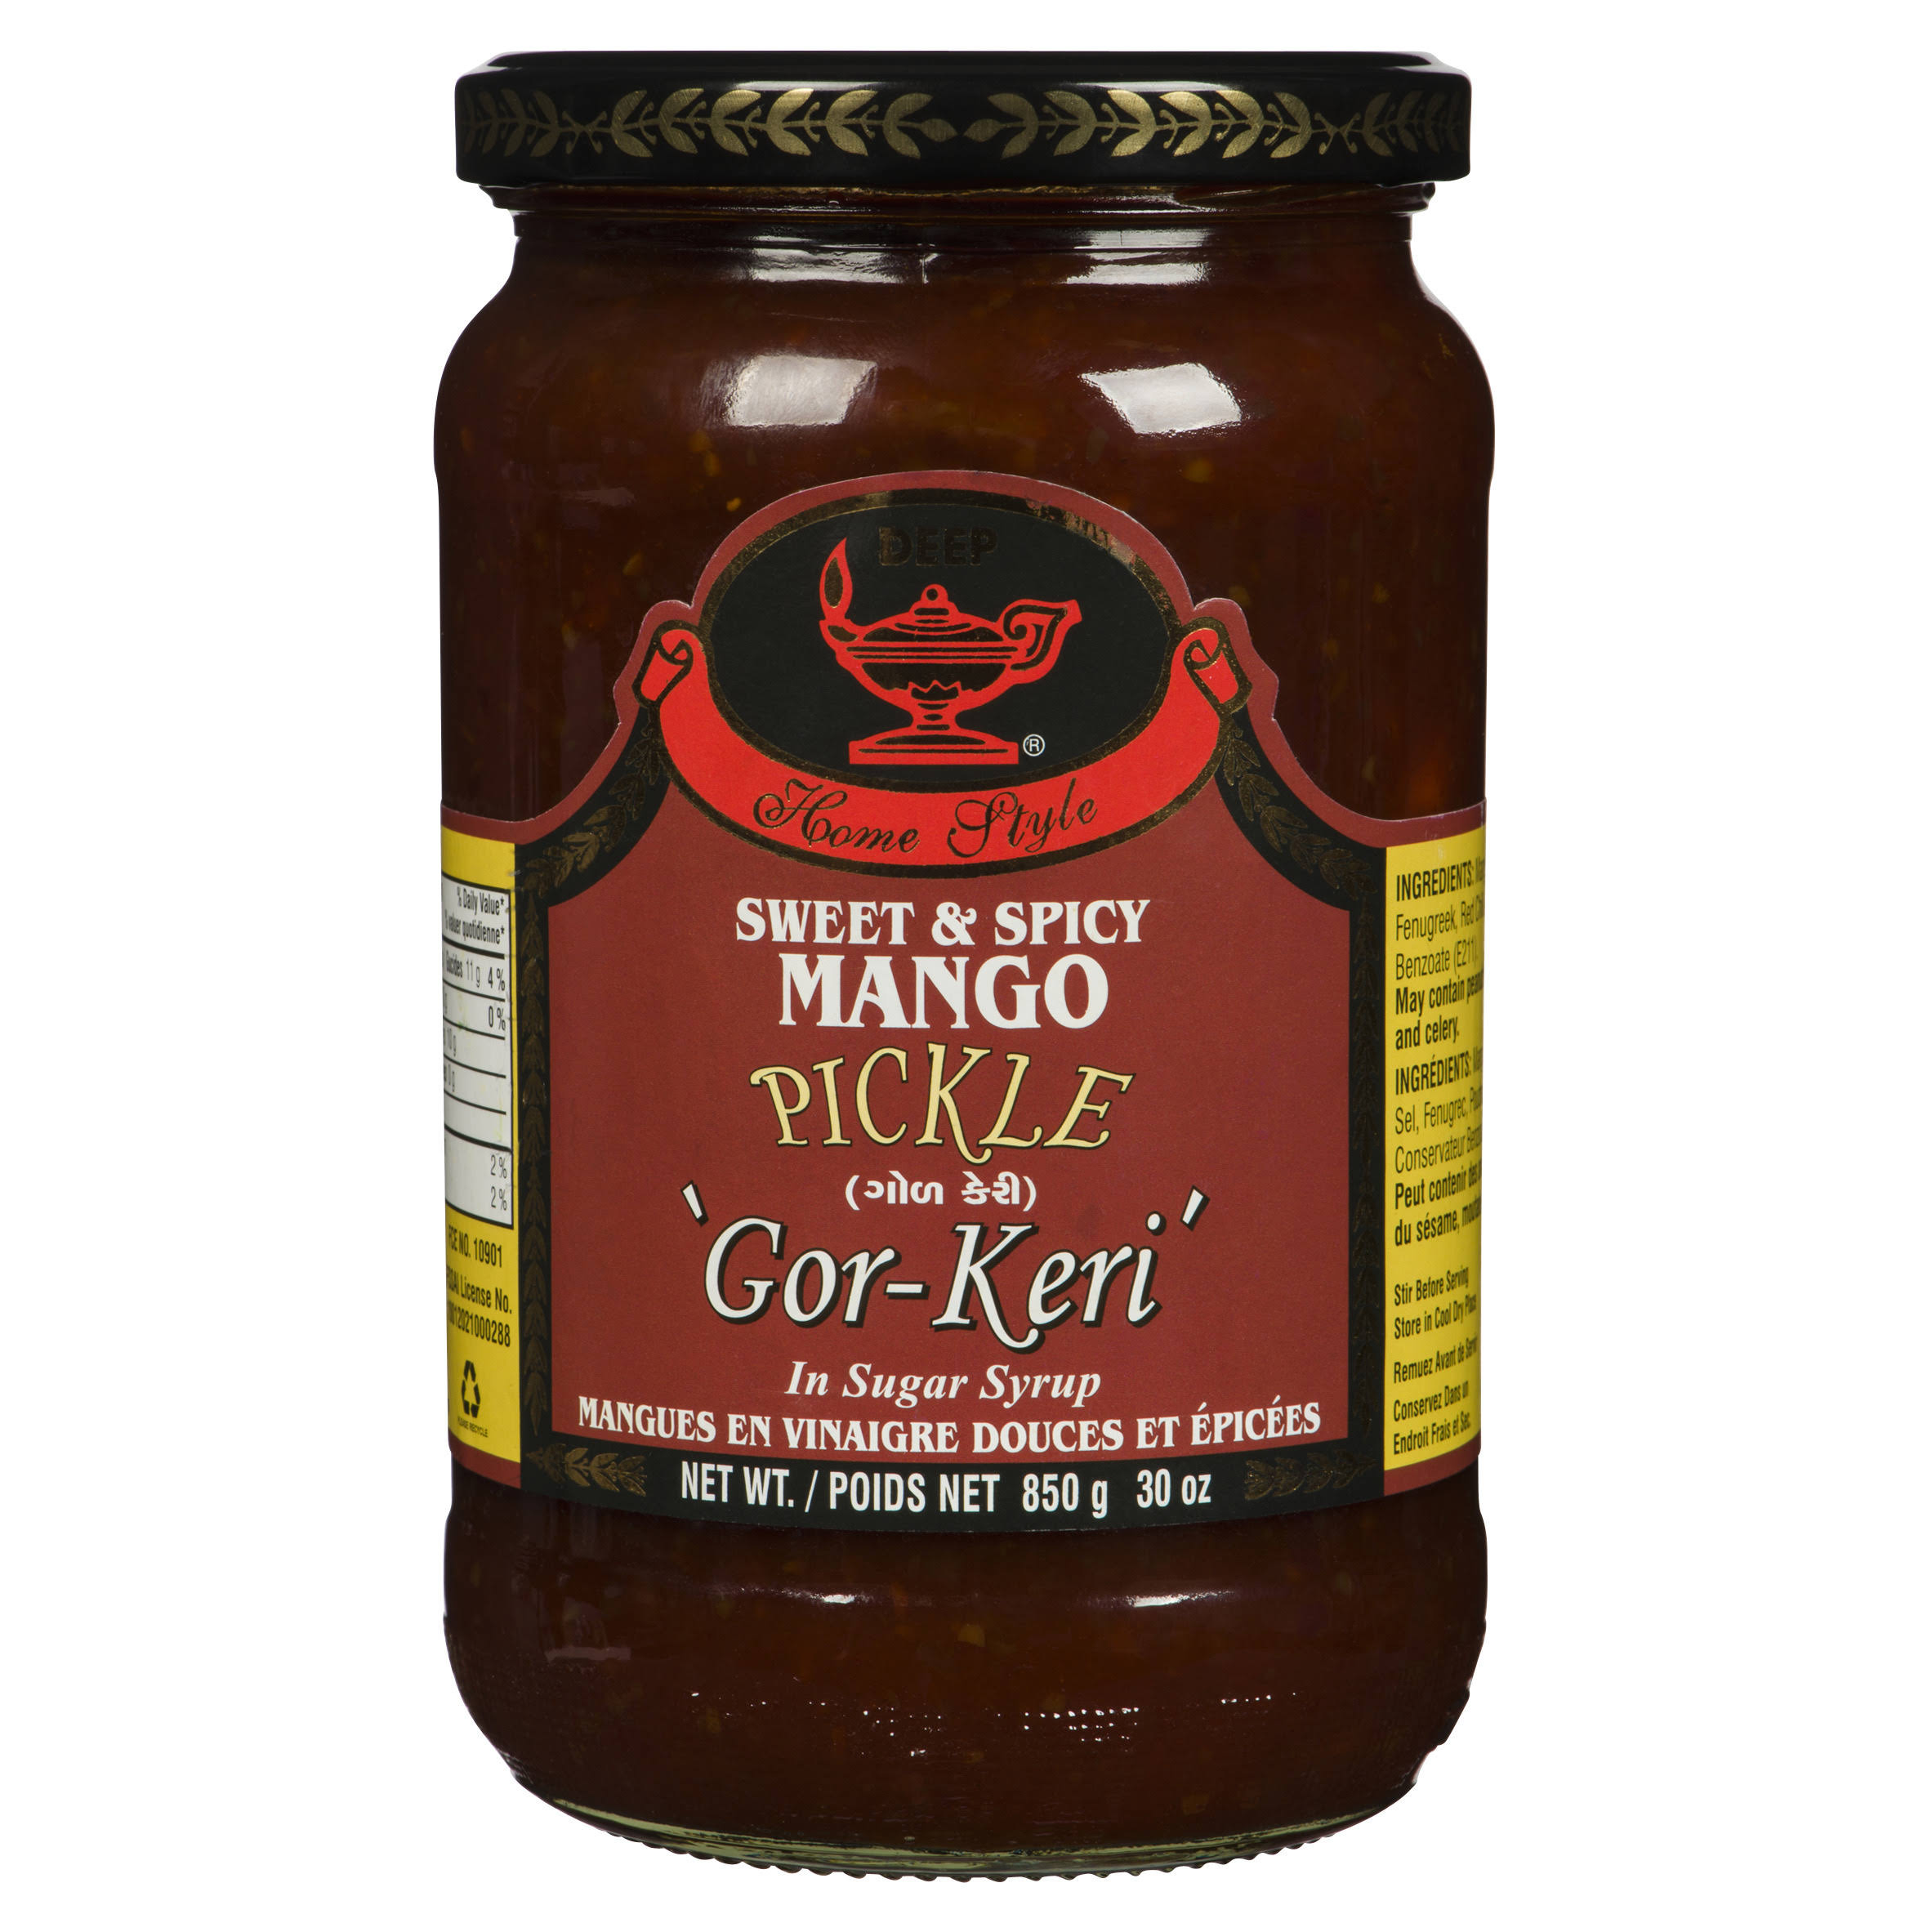 Deep Home Style Mango Pickle Gor-keri - Sweet & Spicy, 30oz